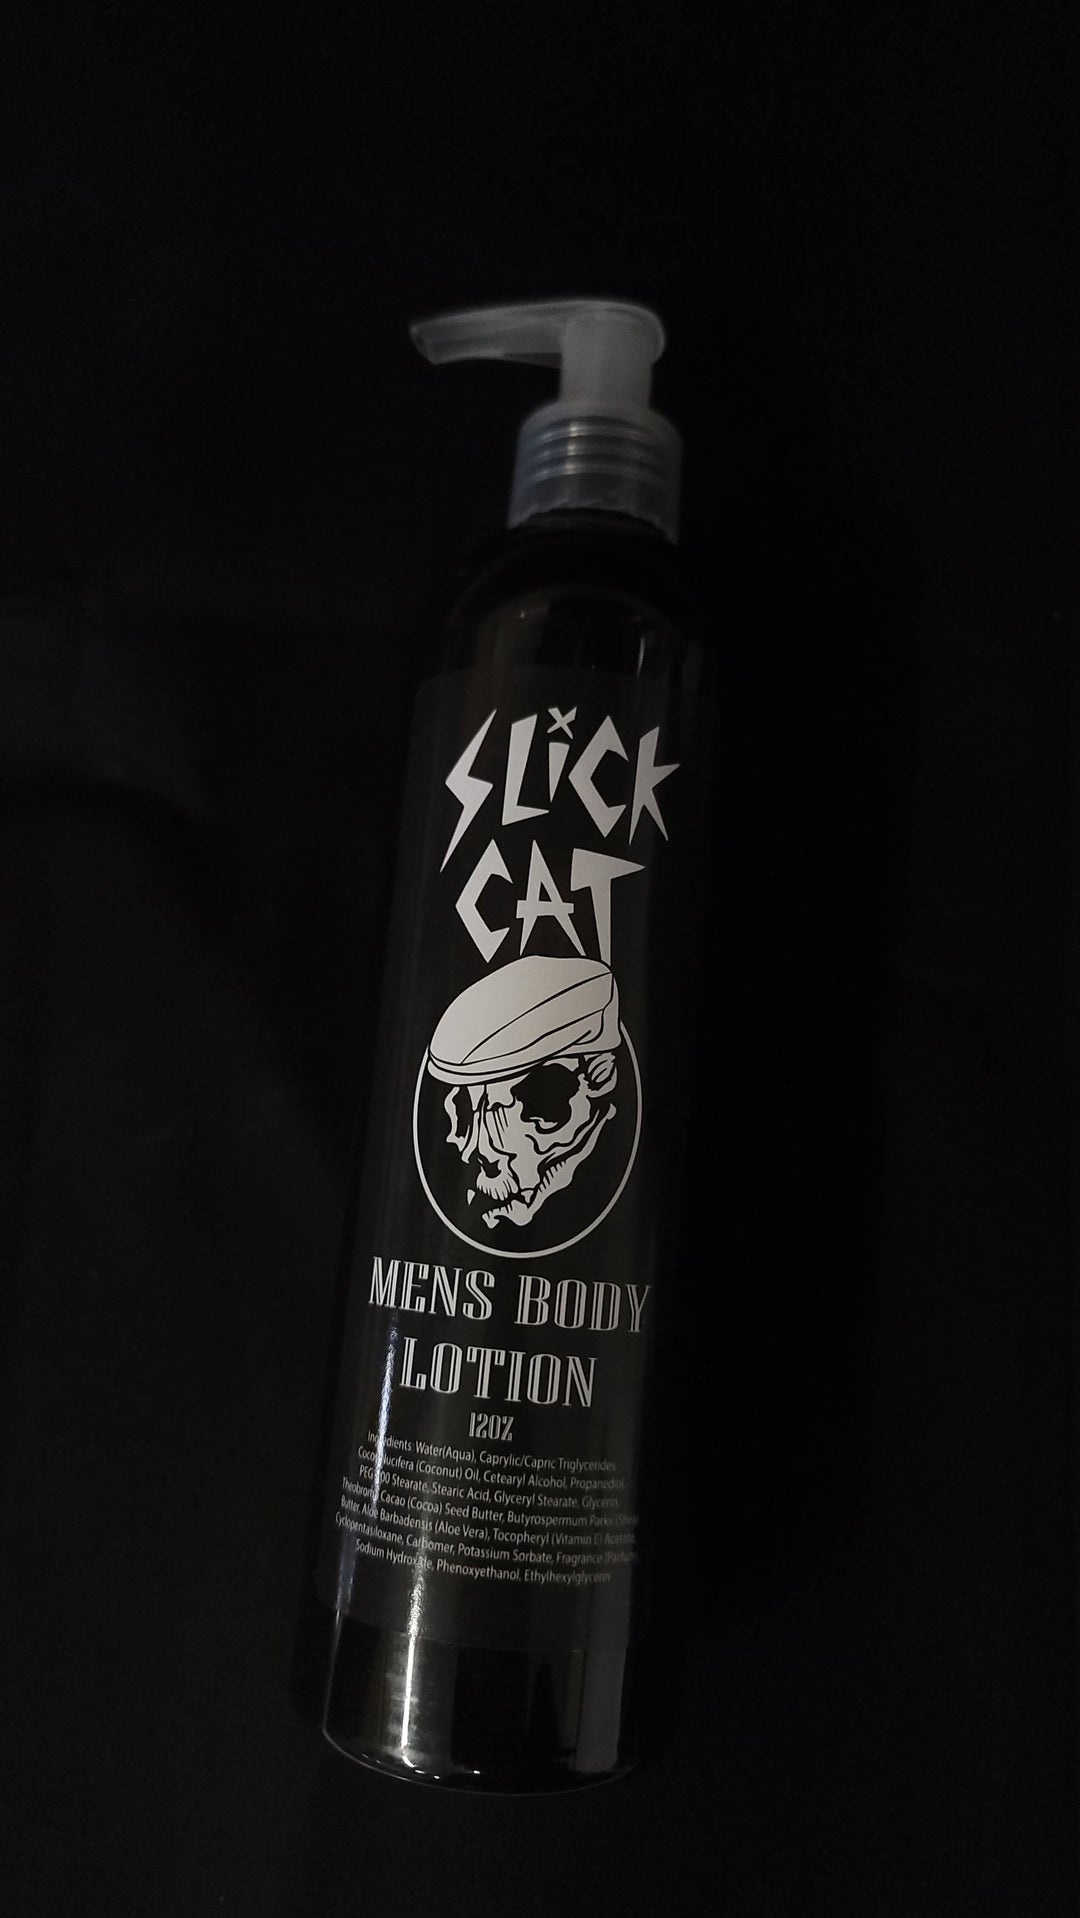 Slick Cat Mens Body lotion